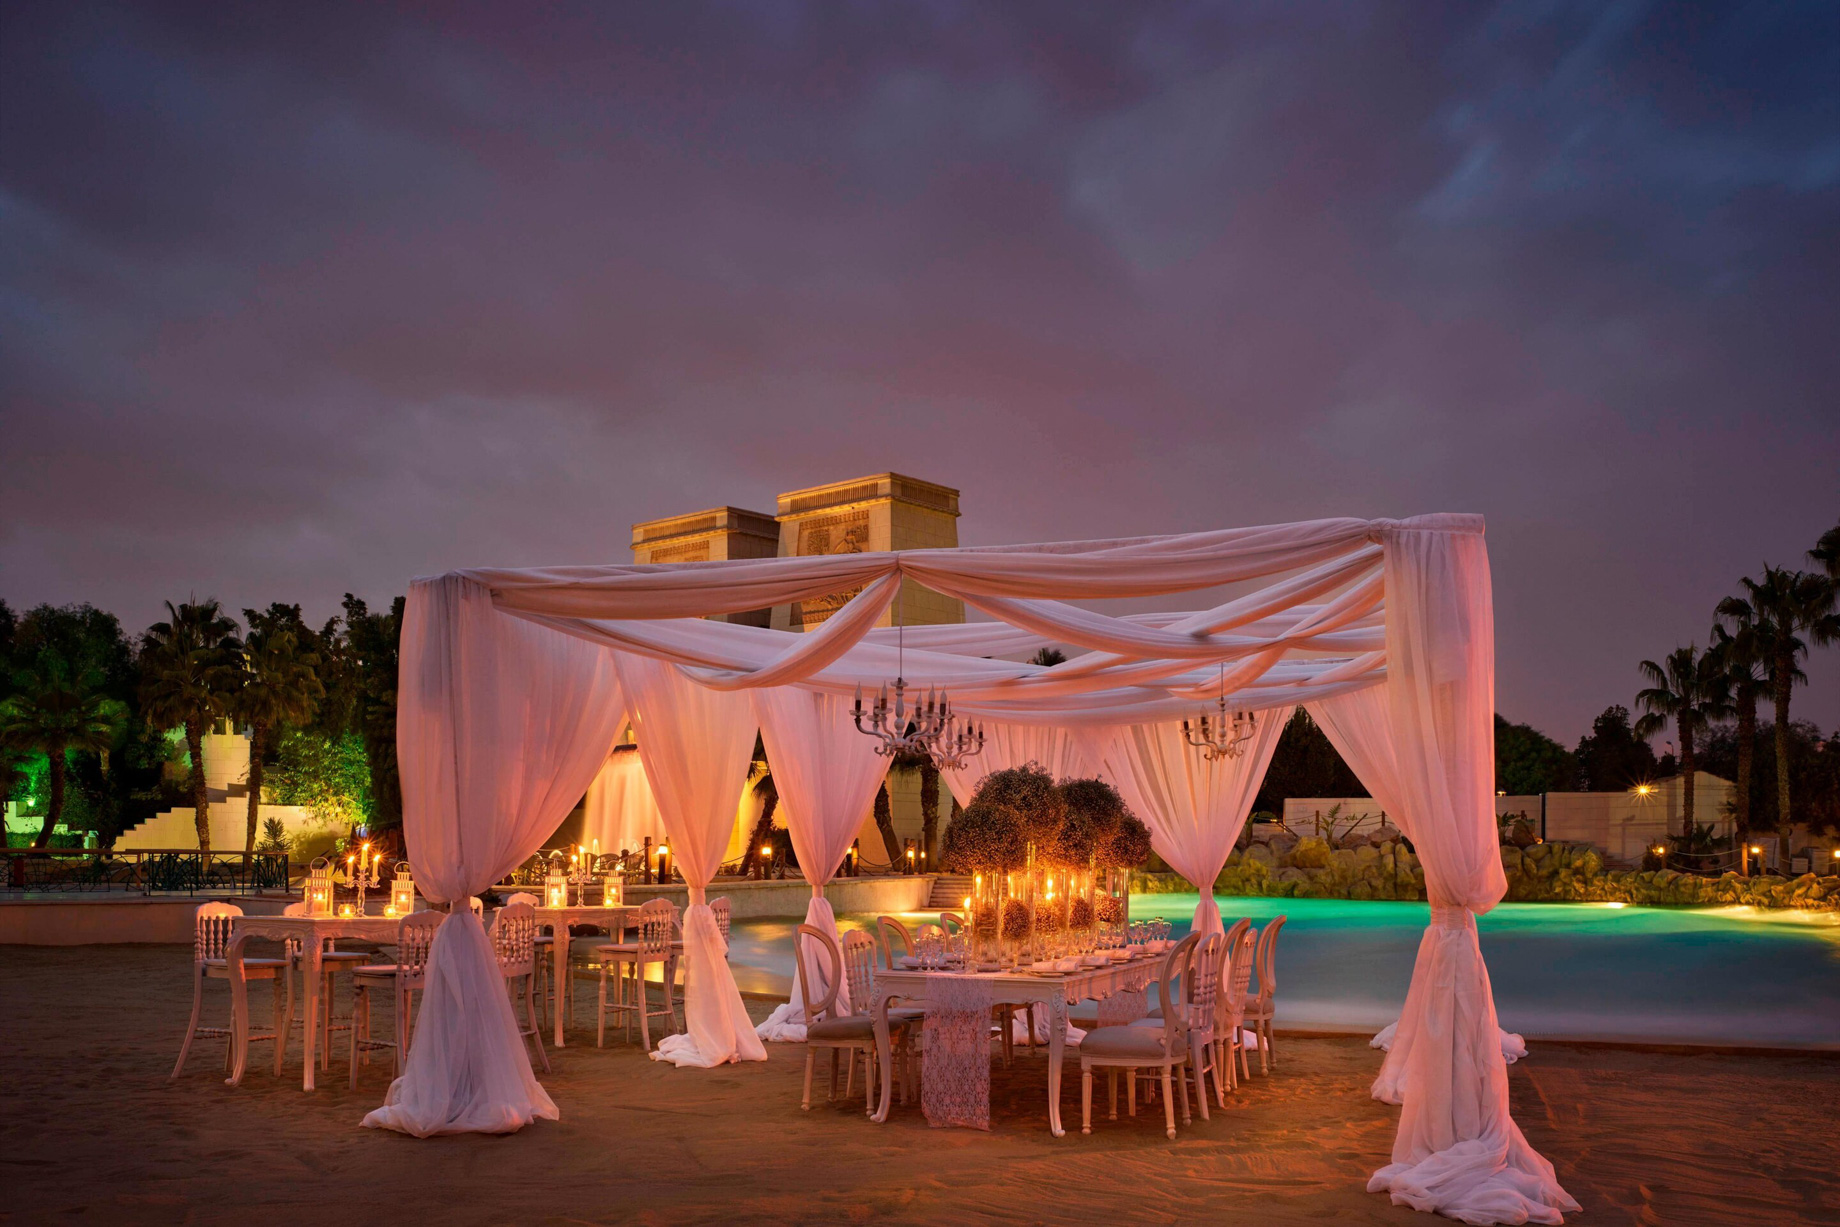 JW Marriott Hotel Cairo – Cairo, Egypt – Outdoor Wedding Reception